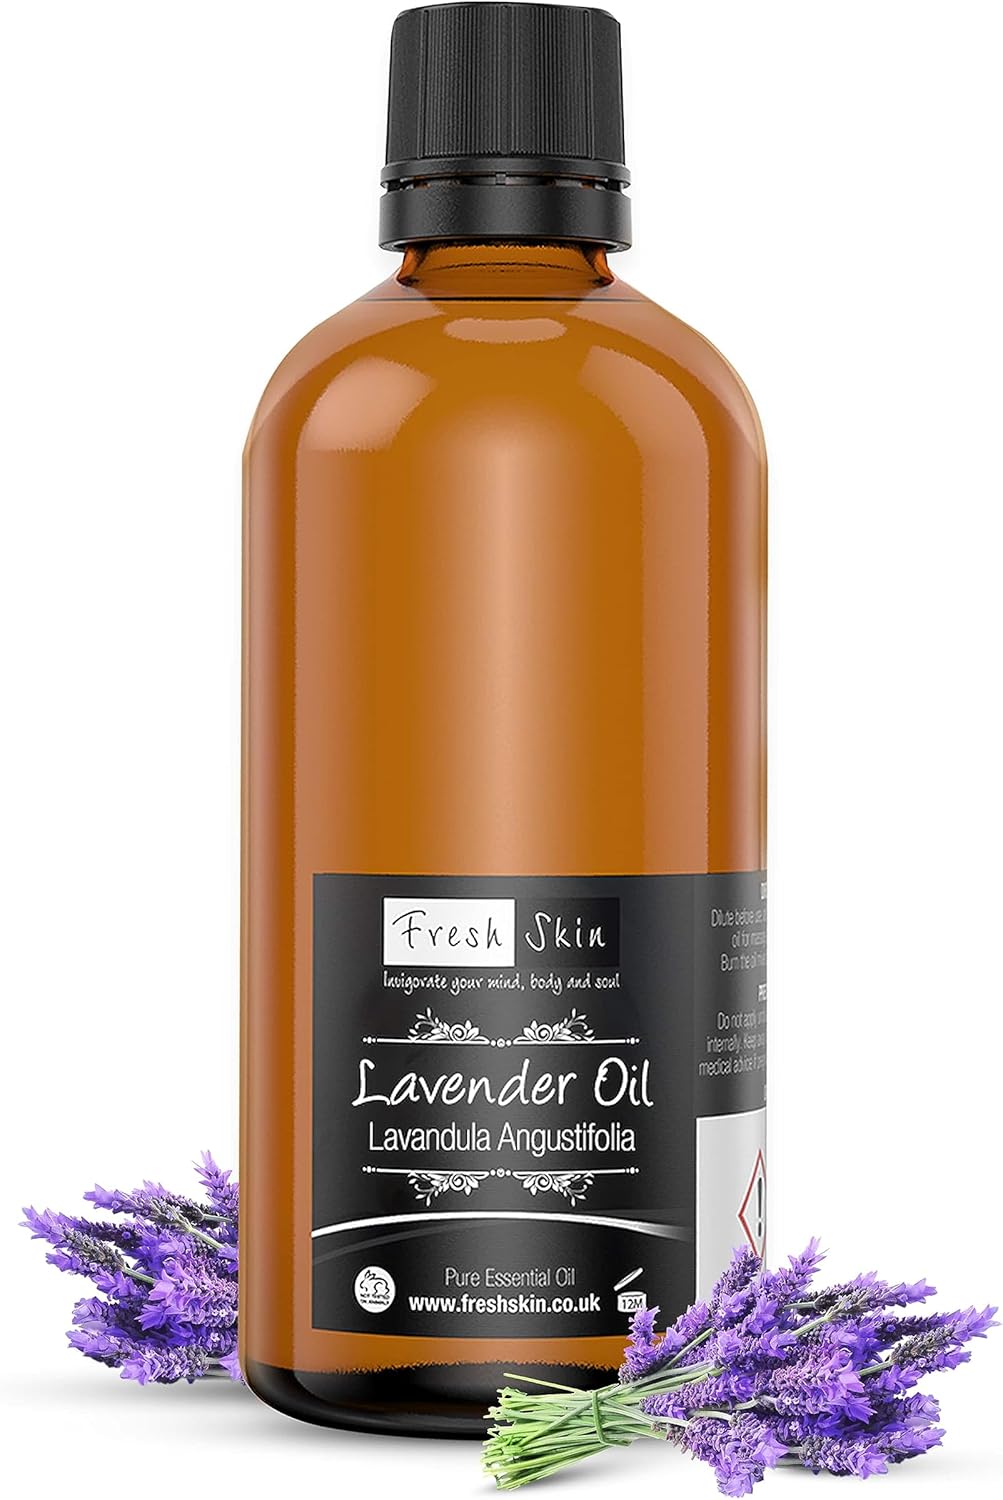 freshskin beauty ltd | 50ml Lavender Essential Oil - 100% Pure & Natural Essential Oils